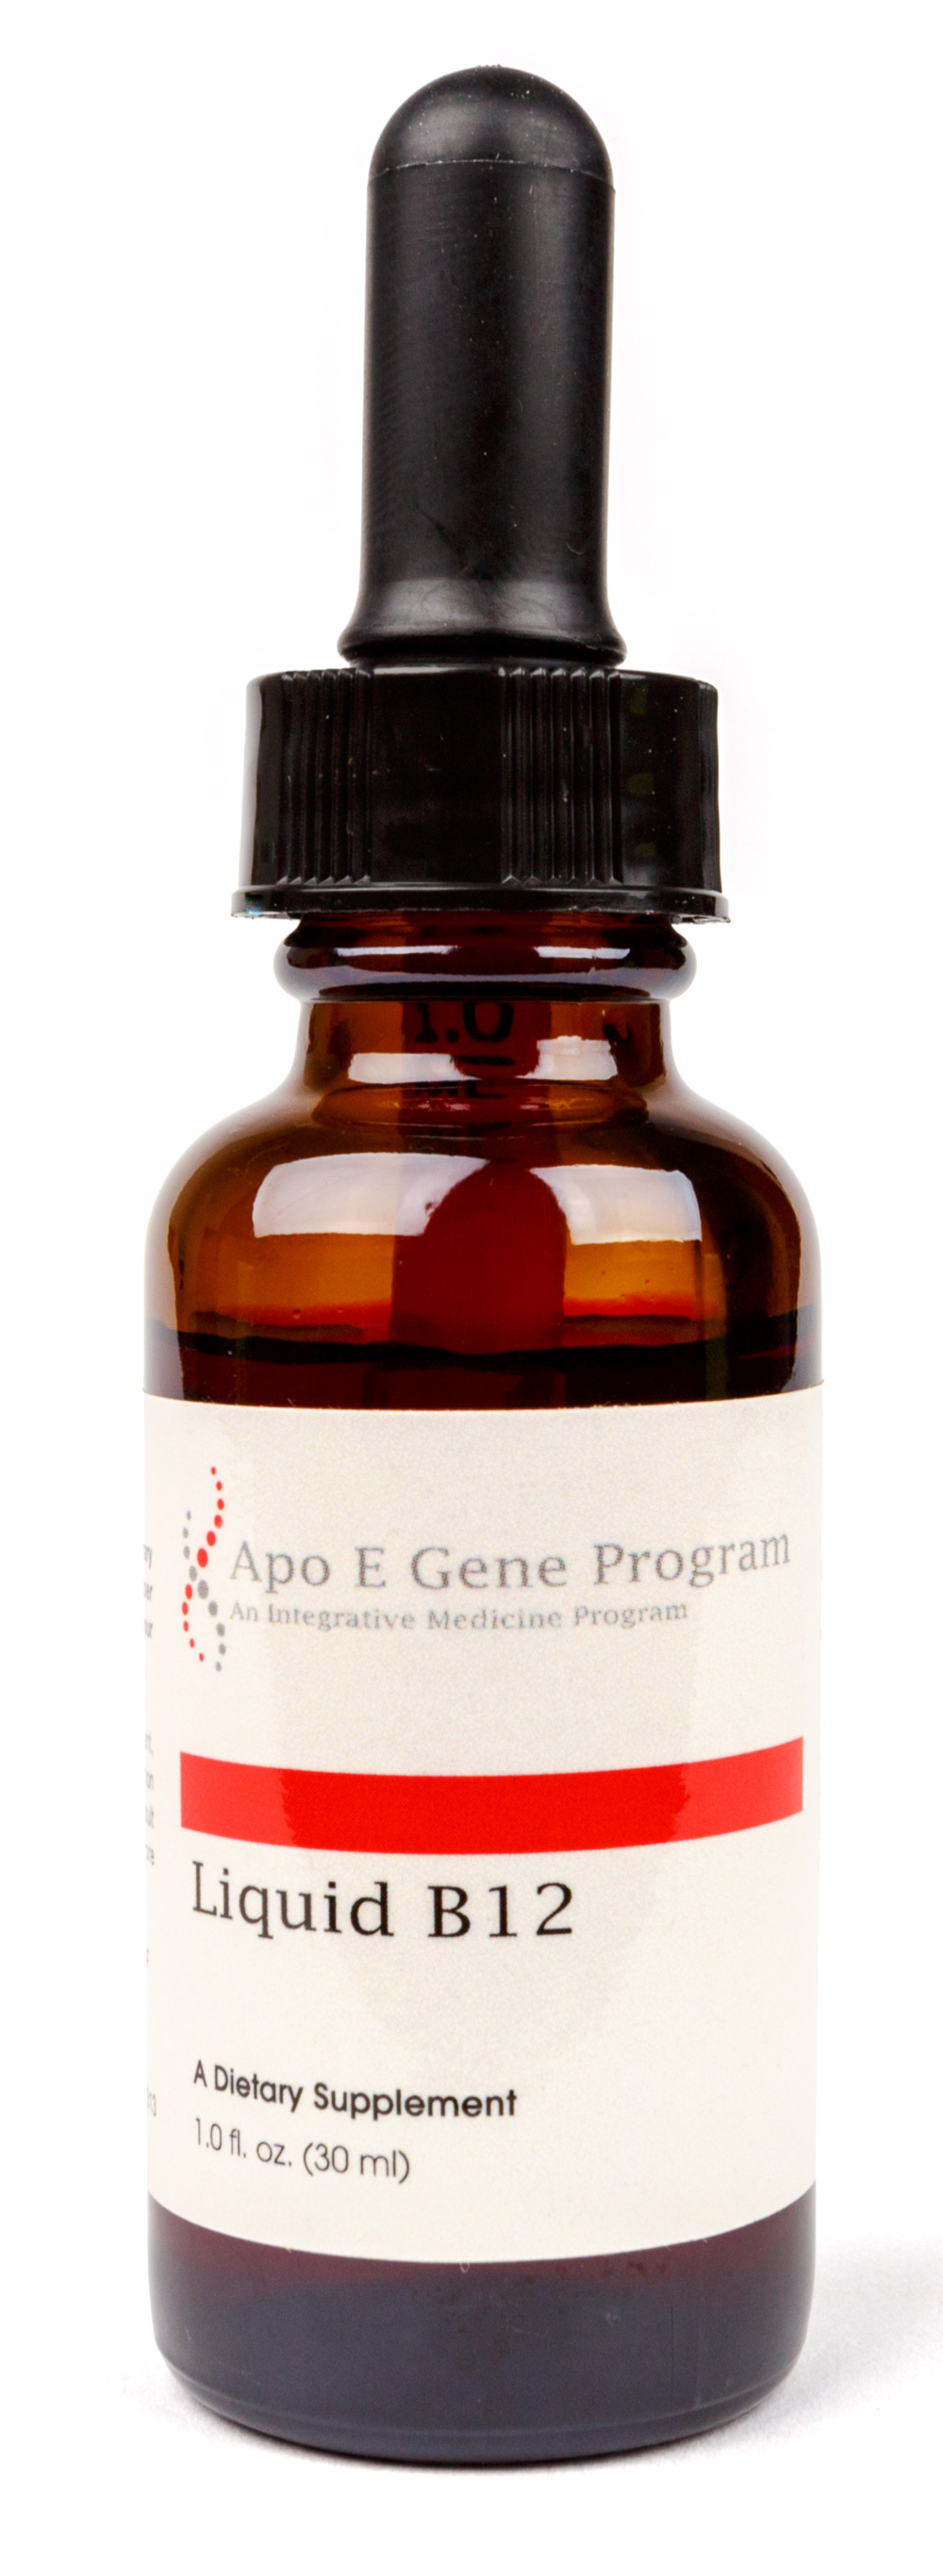 APO E Online Program Product